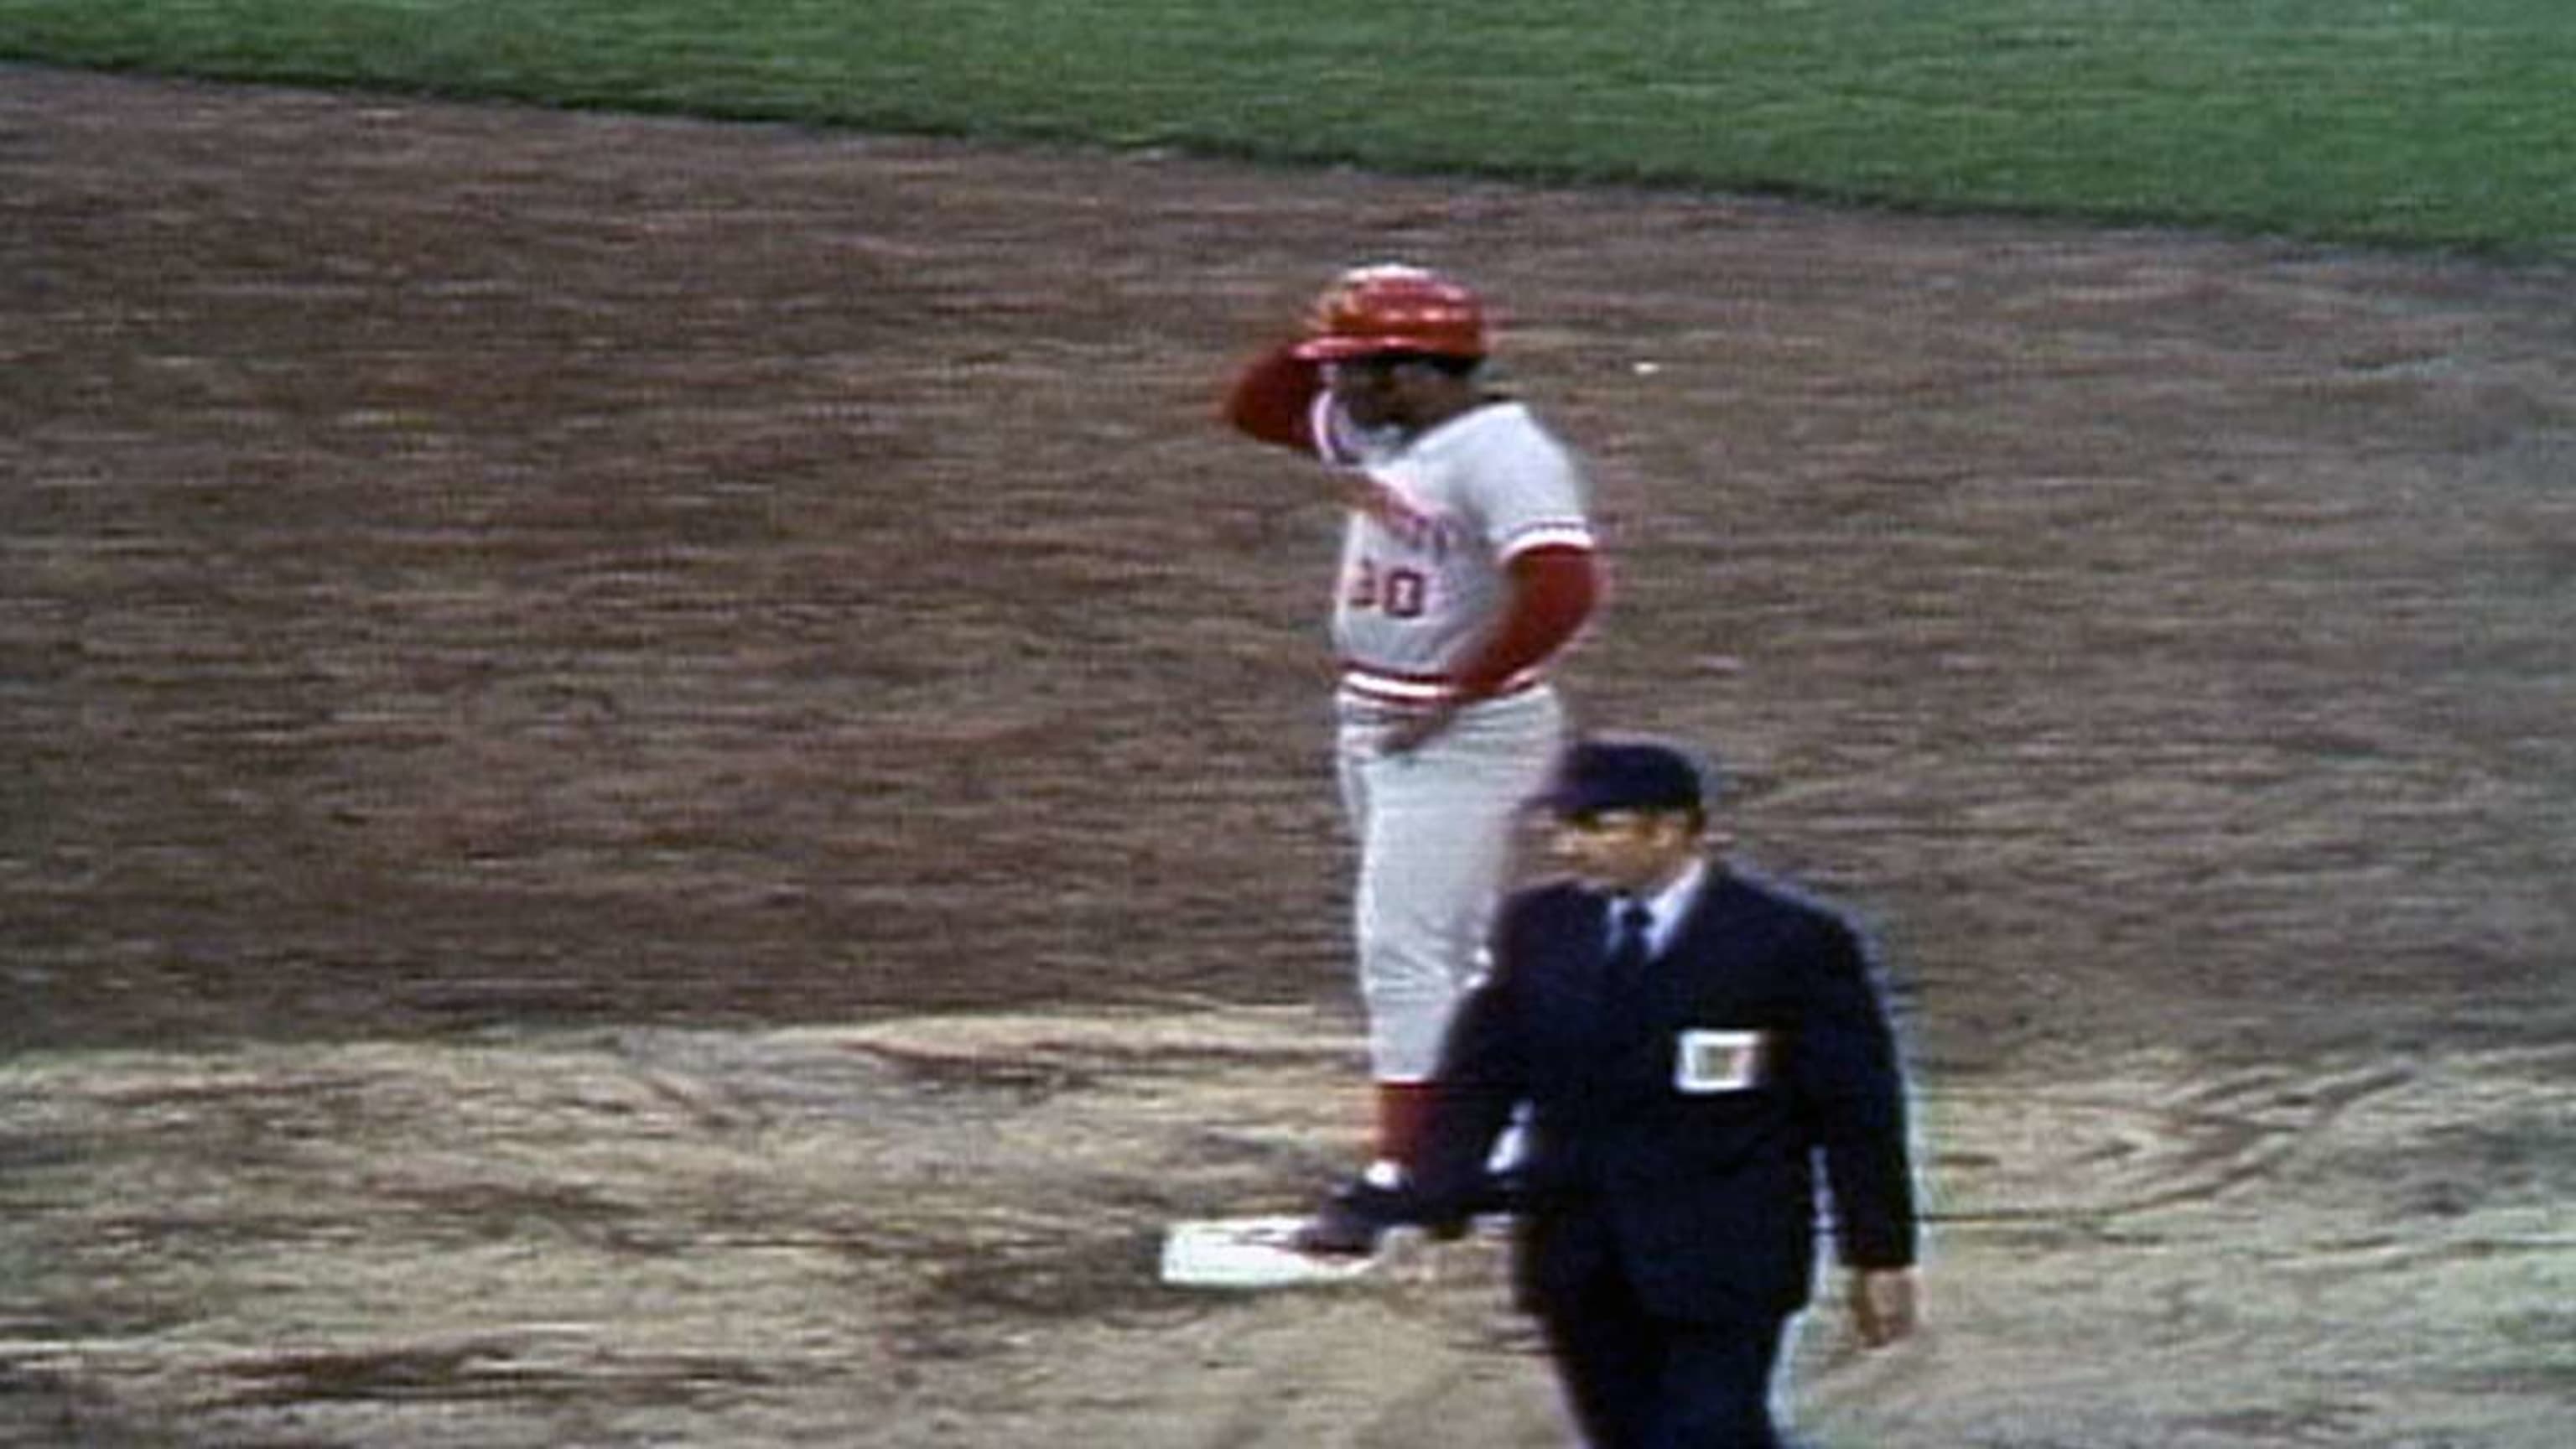 1975 World Series recap